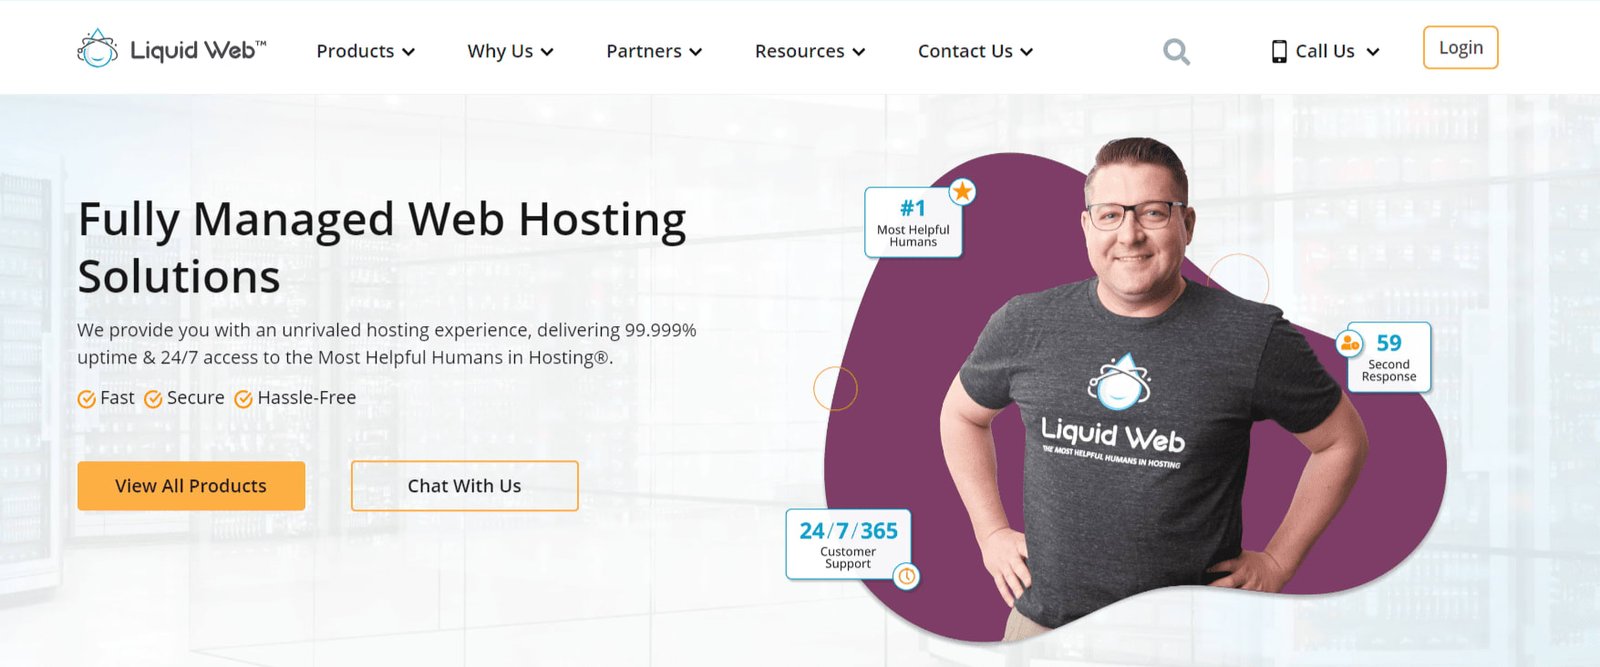 Liquid Web’s fully managed web hosting landing page.